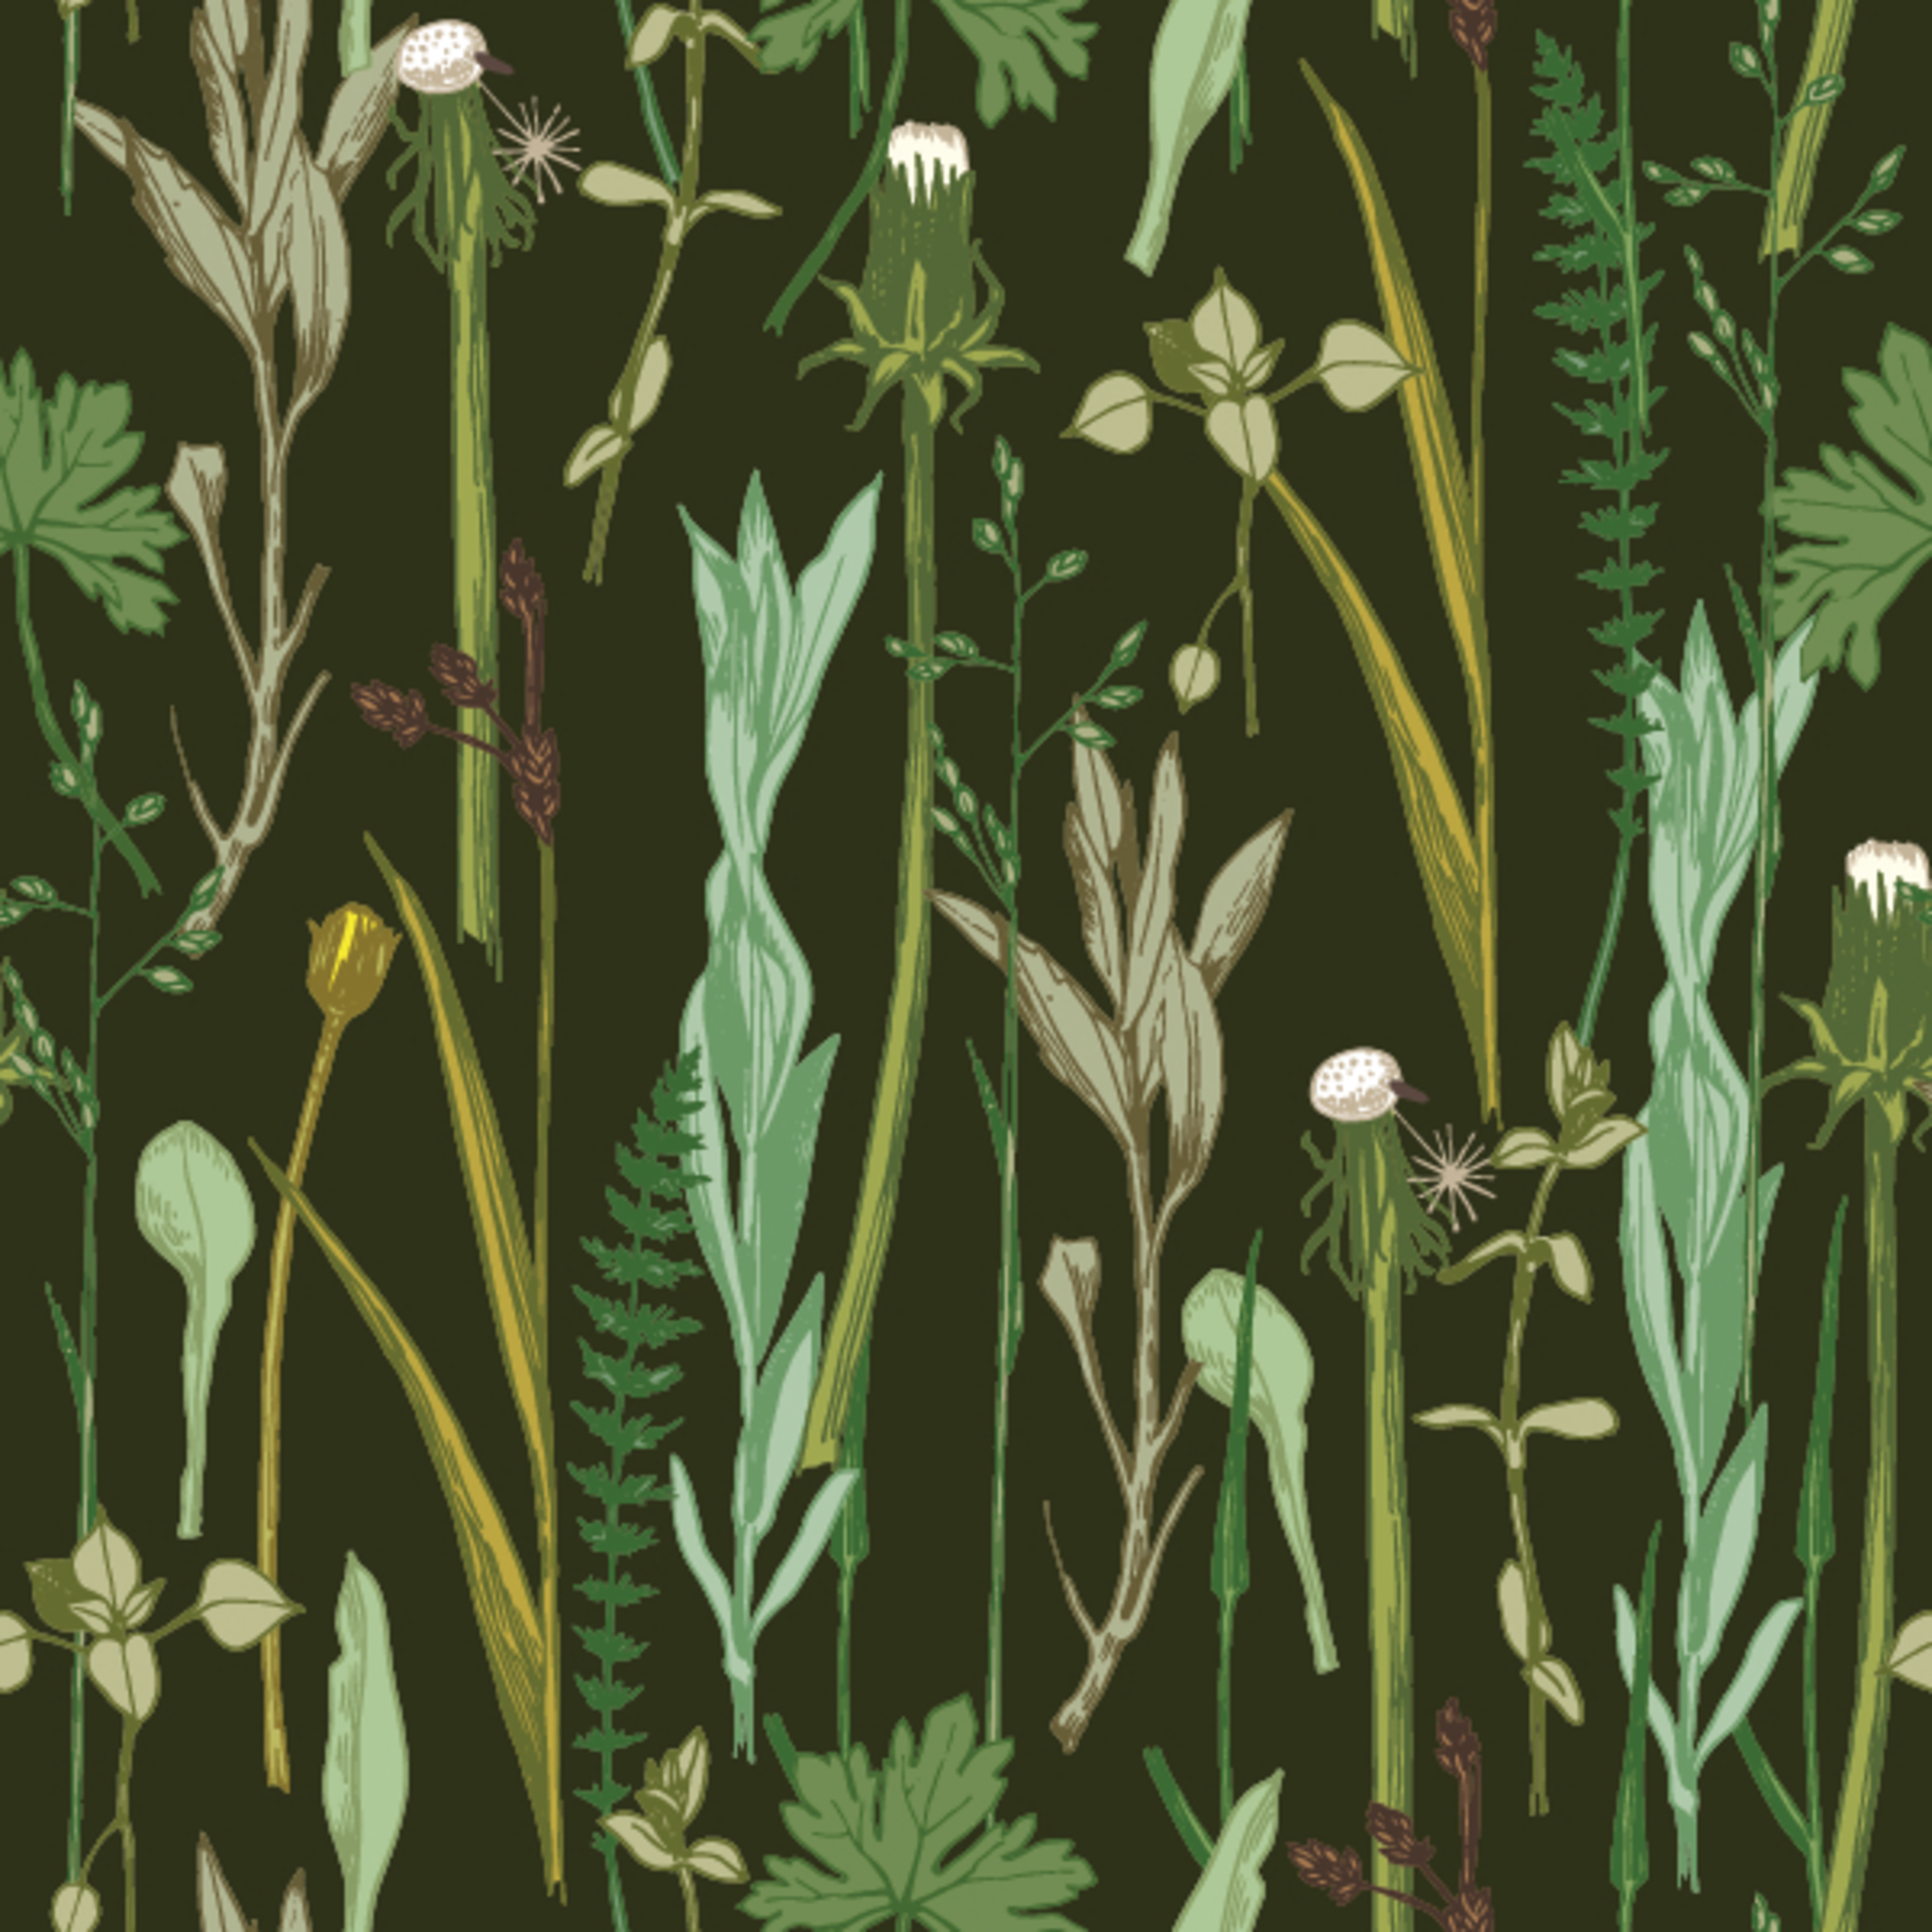 Vintage Herbal Pattern Wallpaper - Murals Your Way